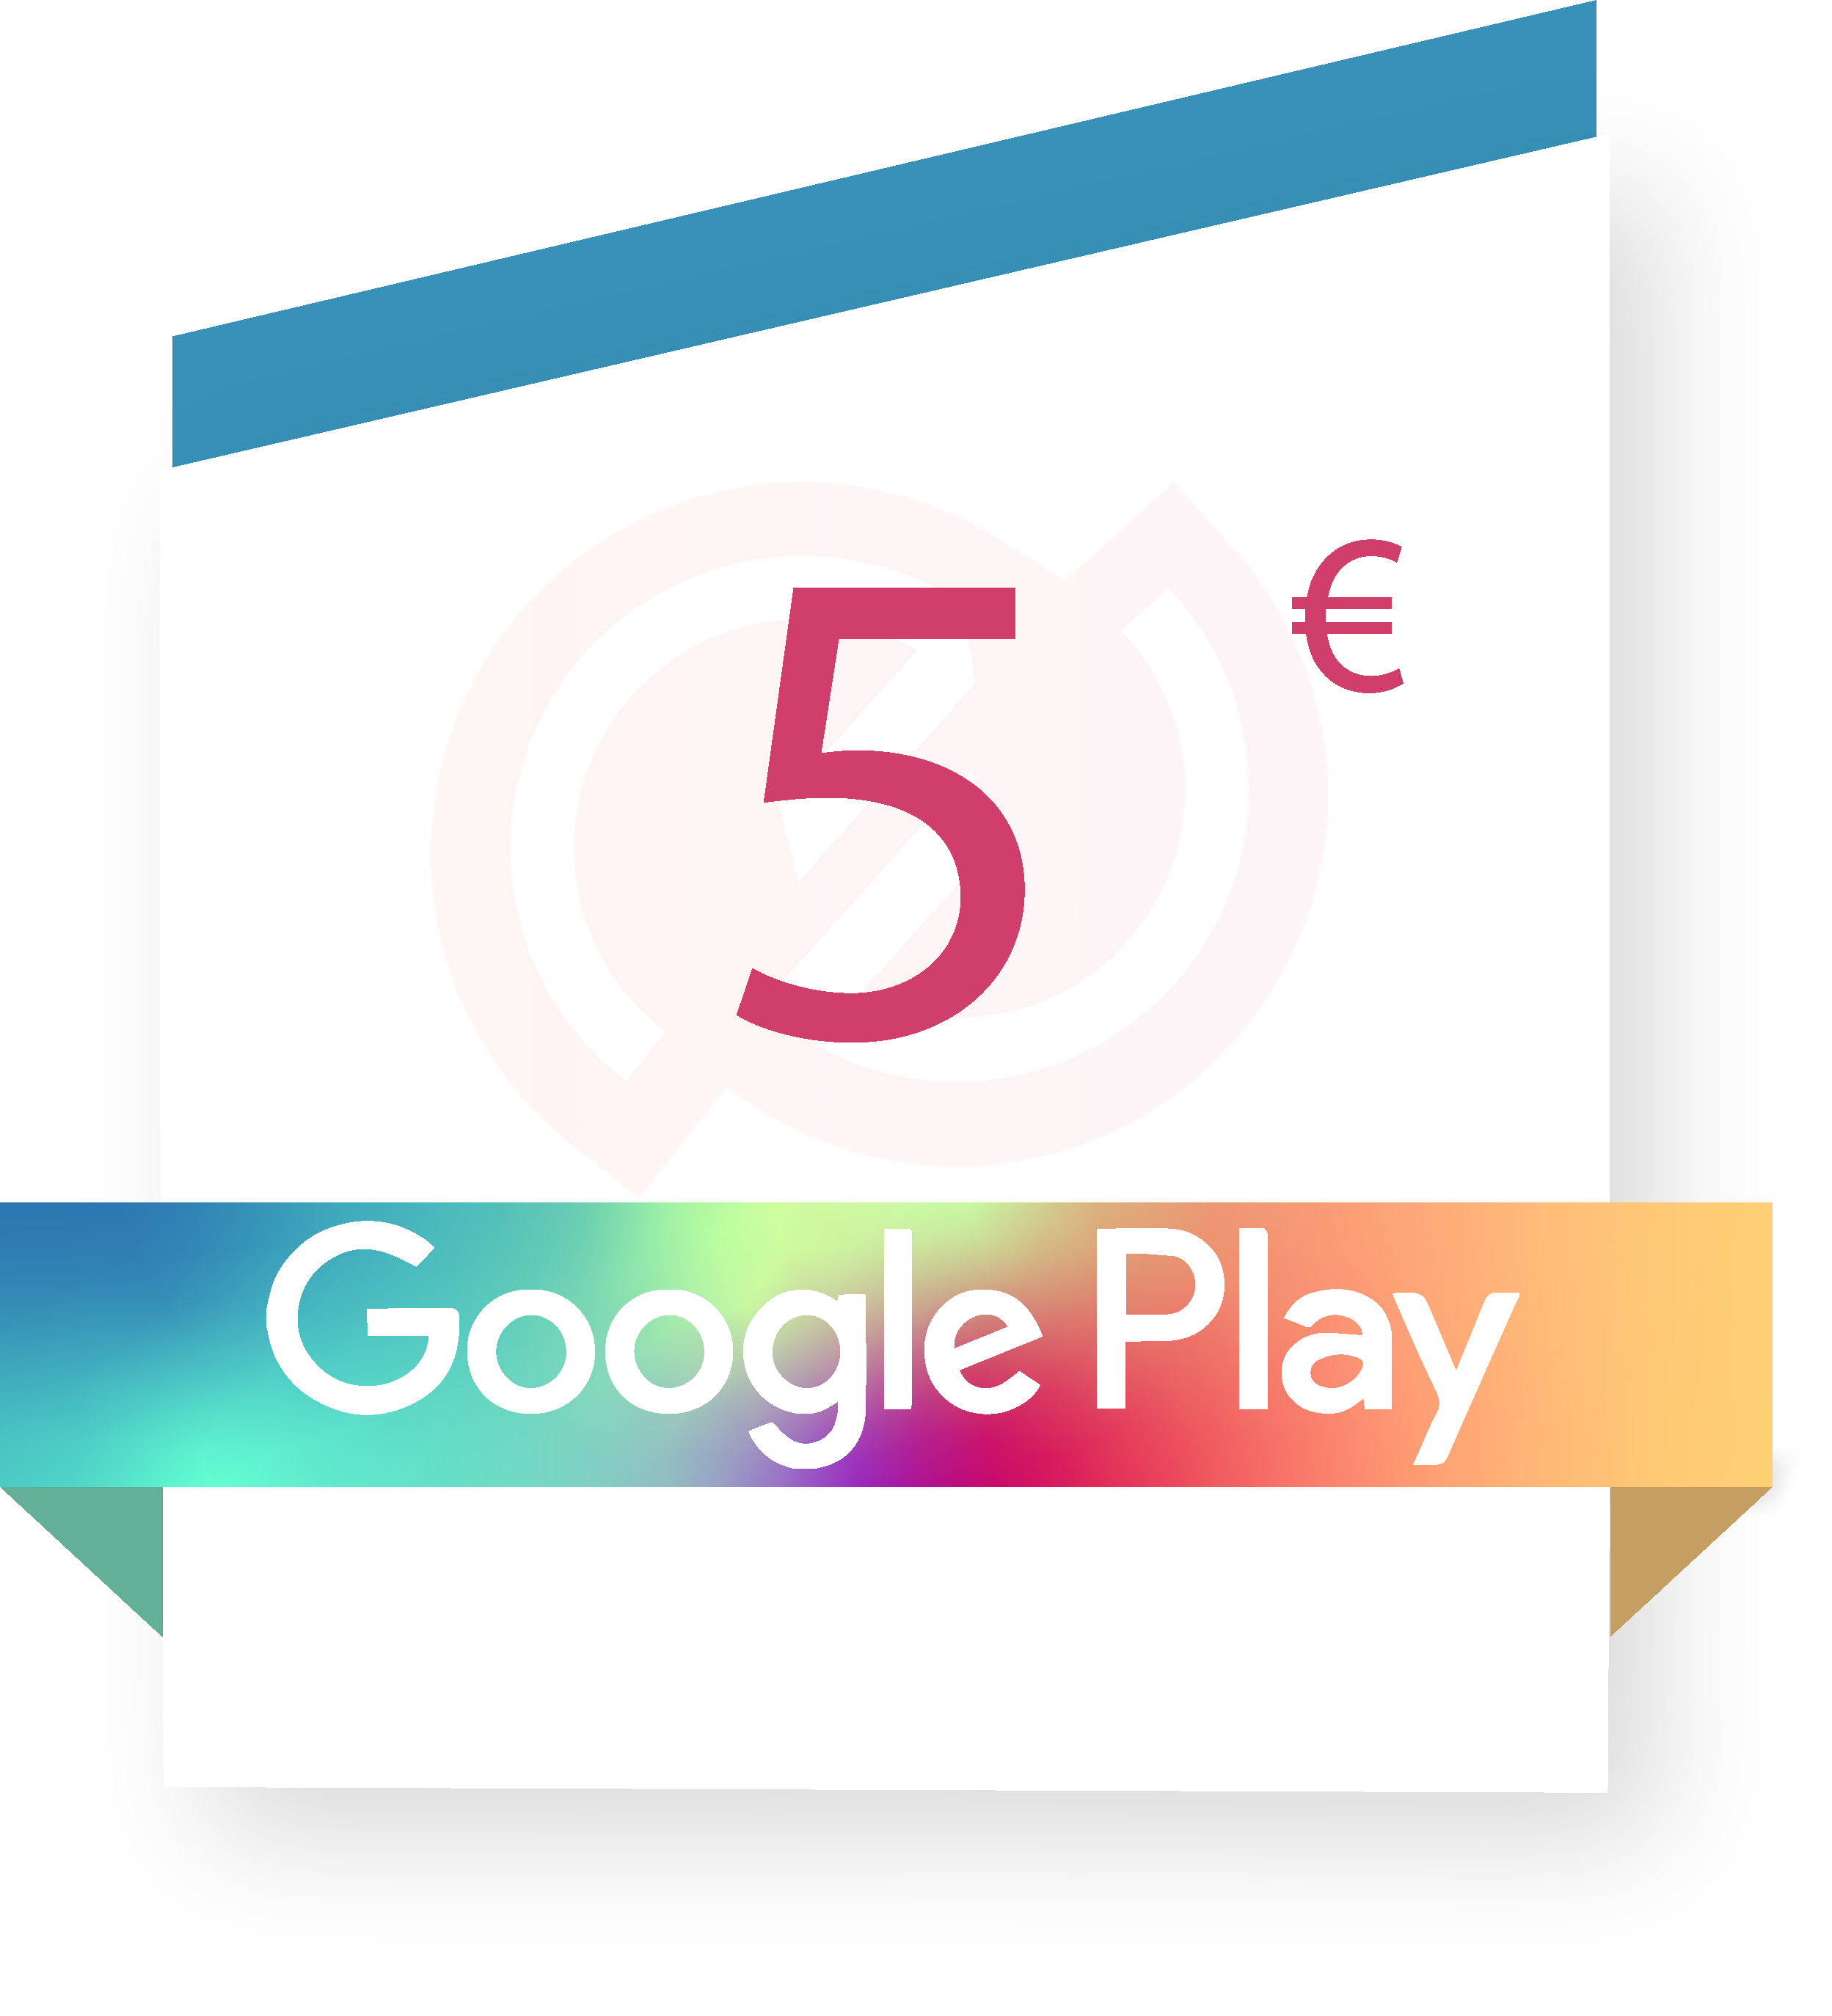 Google play 5€